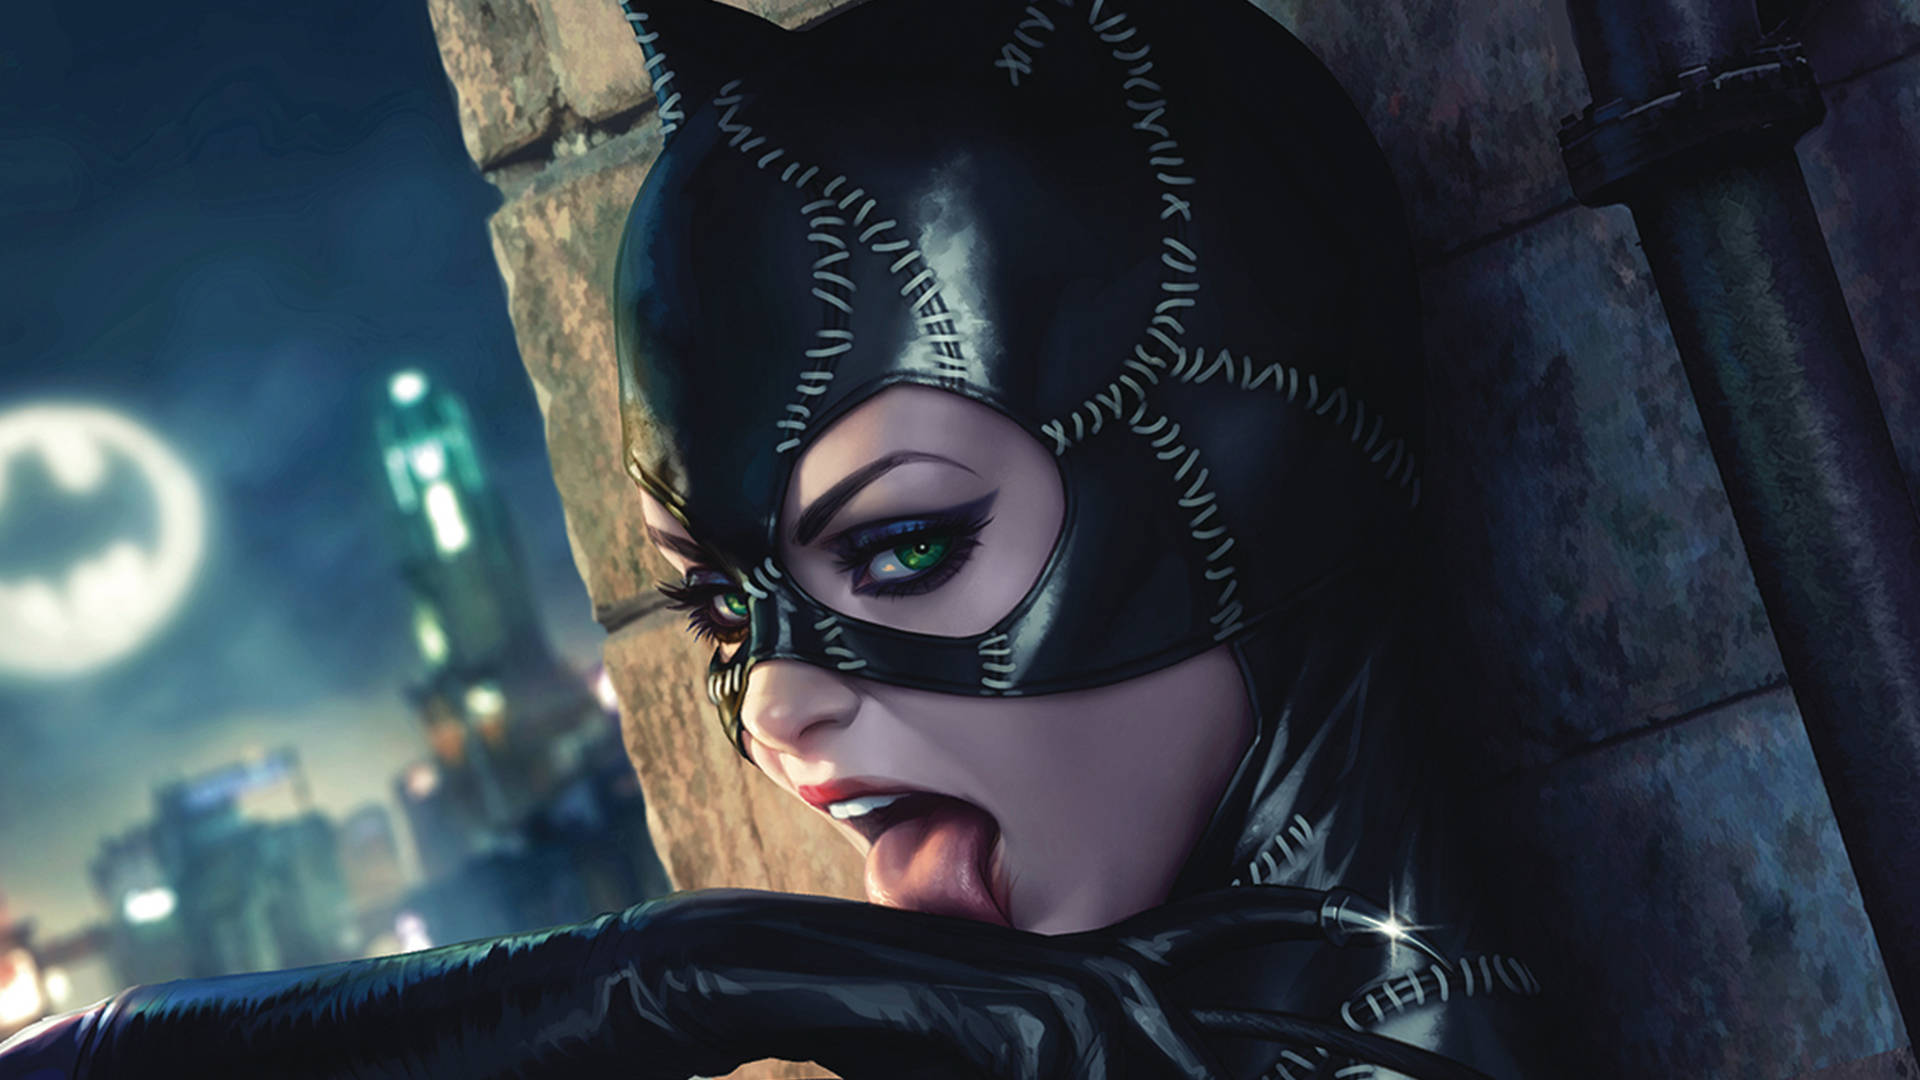 Catwoman Digital Art Wallpaper